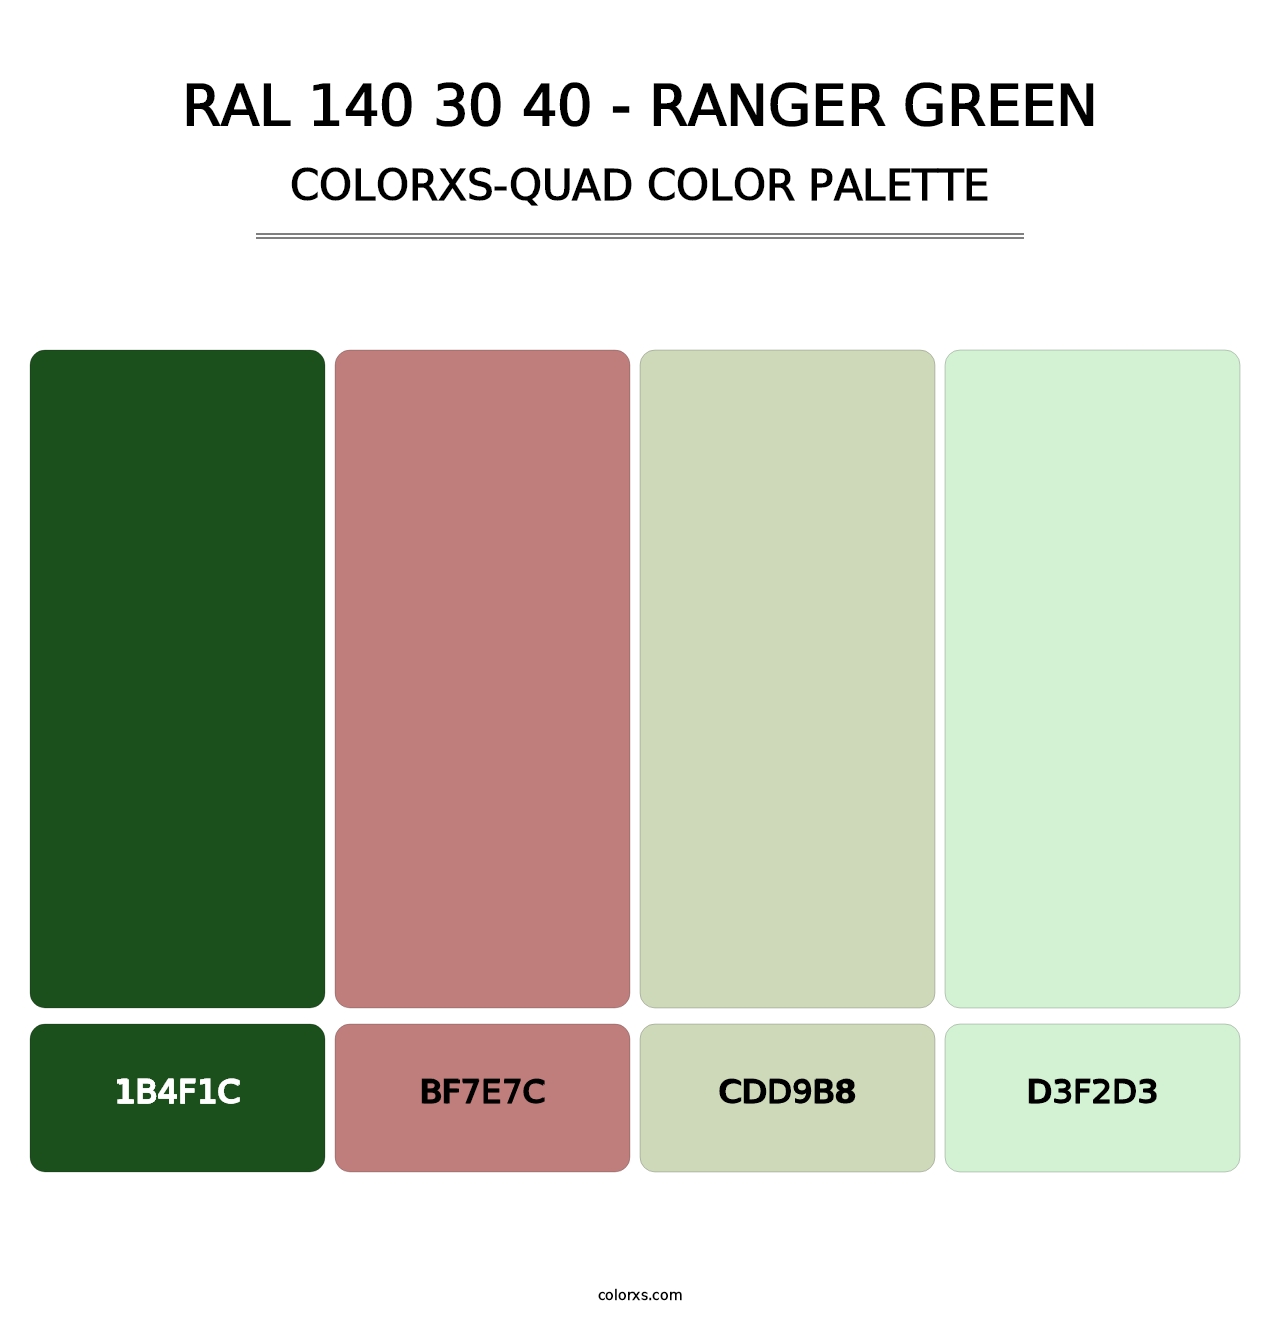 RAL 140 30 40 - Ranger Green - Colorxs Quad Palette